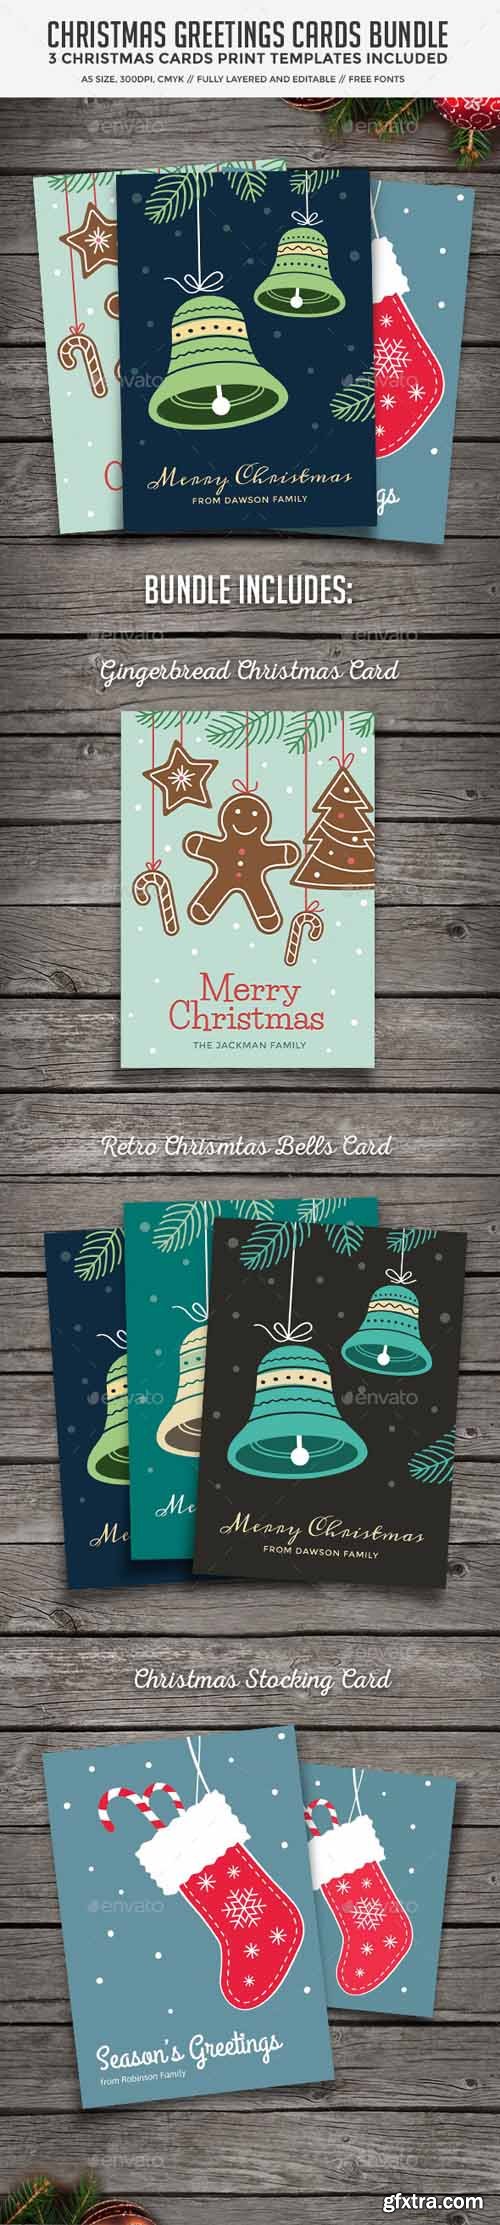 GR - Christmas Cards Bundle 9545849